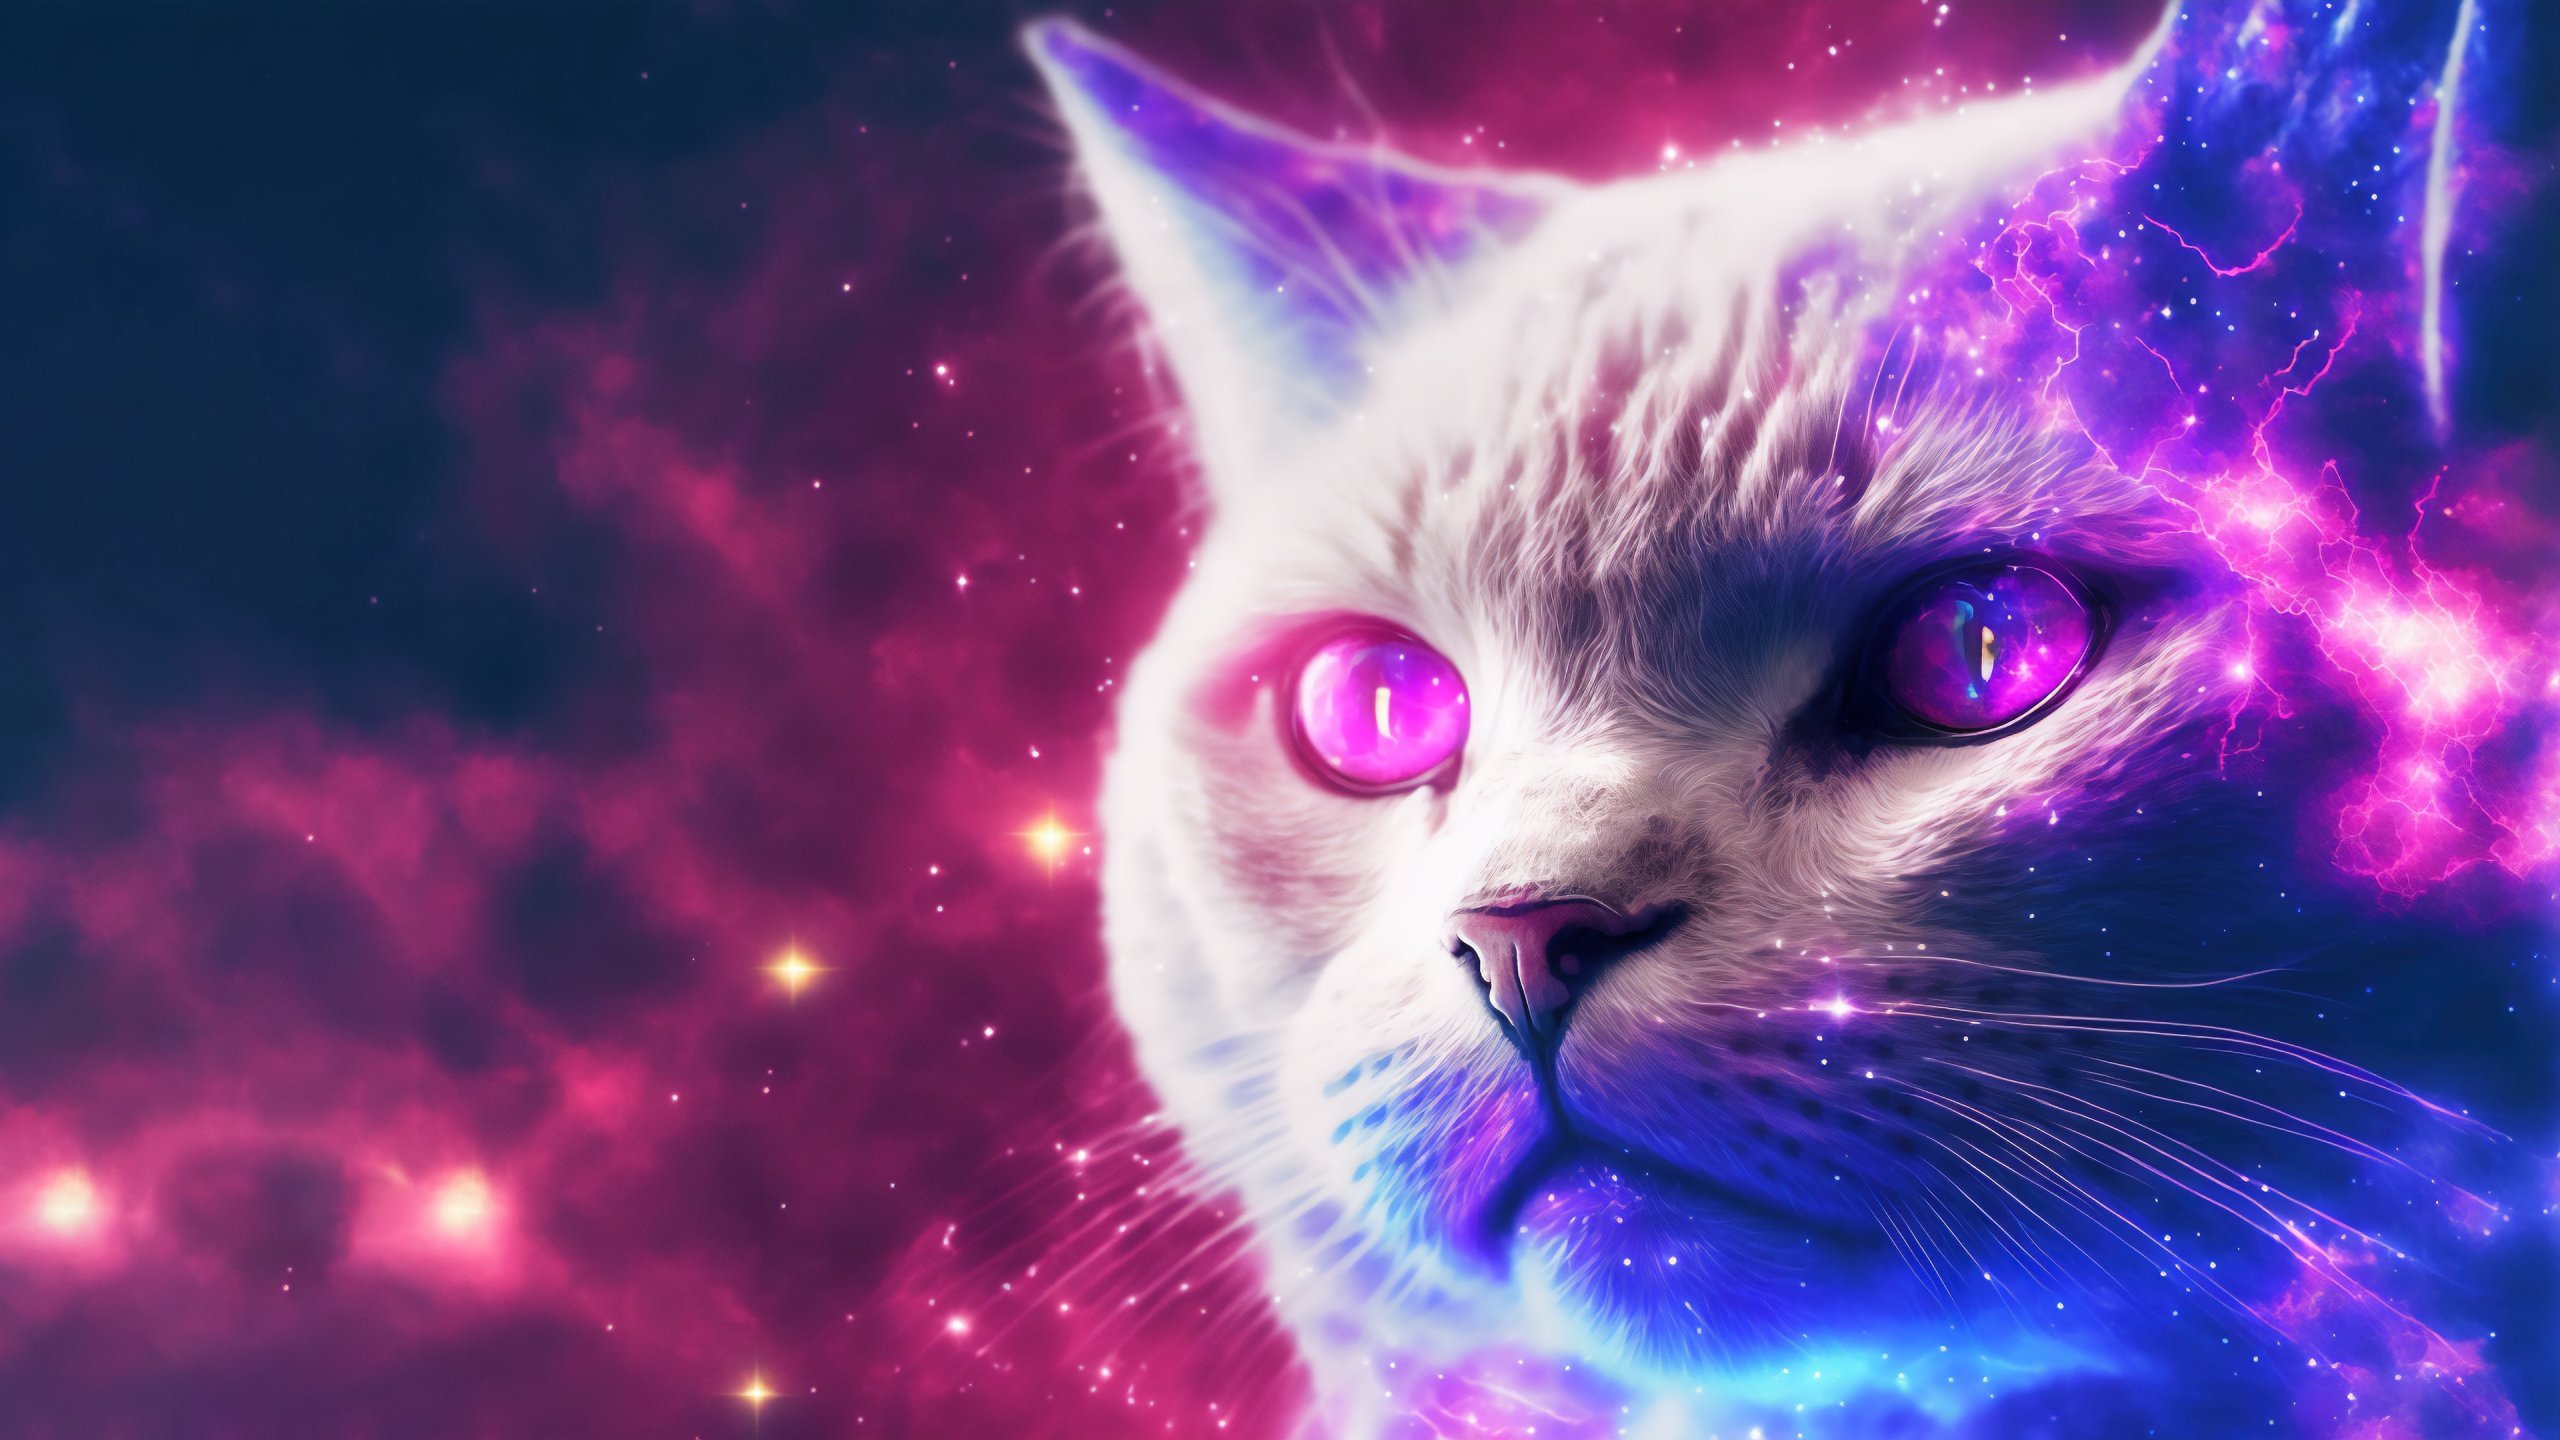 Neon cat traced galaxy digital illustration by xRebelYellx on DeviantArt